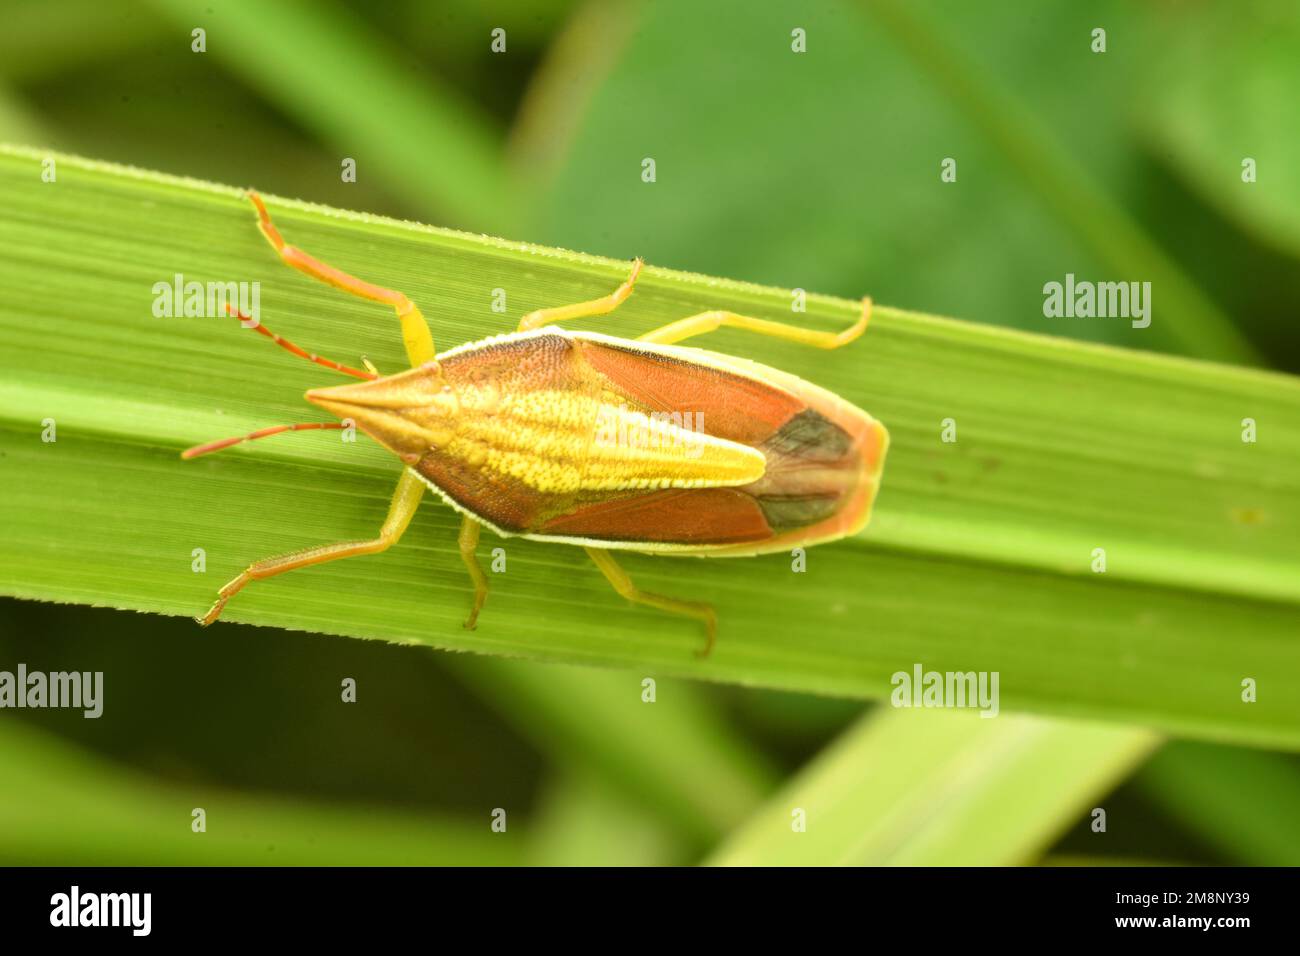 Yellow and brown shield bug crawling on green grass. Megarrhampus hastatus. Macro. Java, Indonesia. Stock Photo